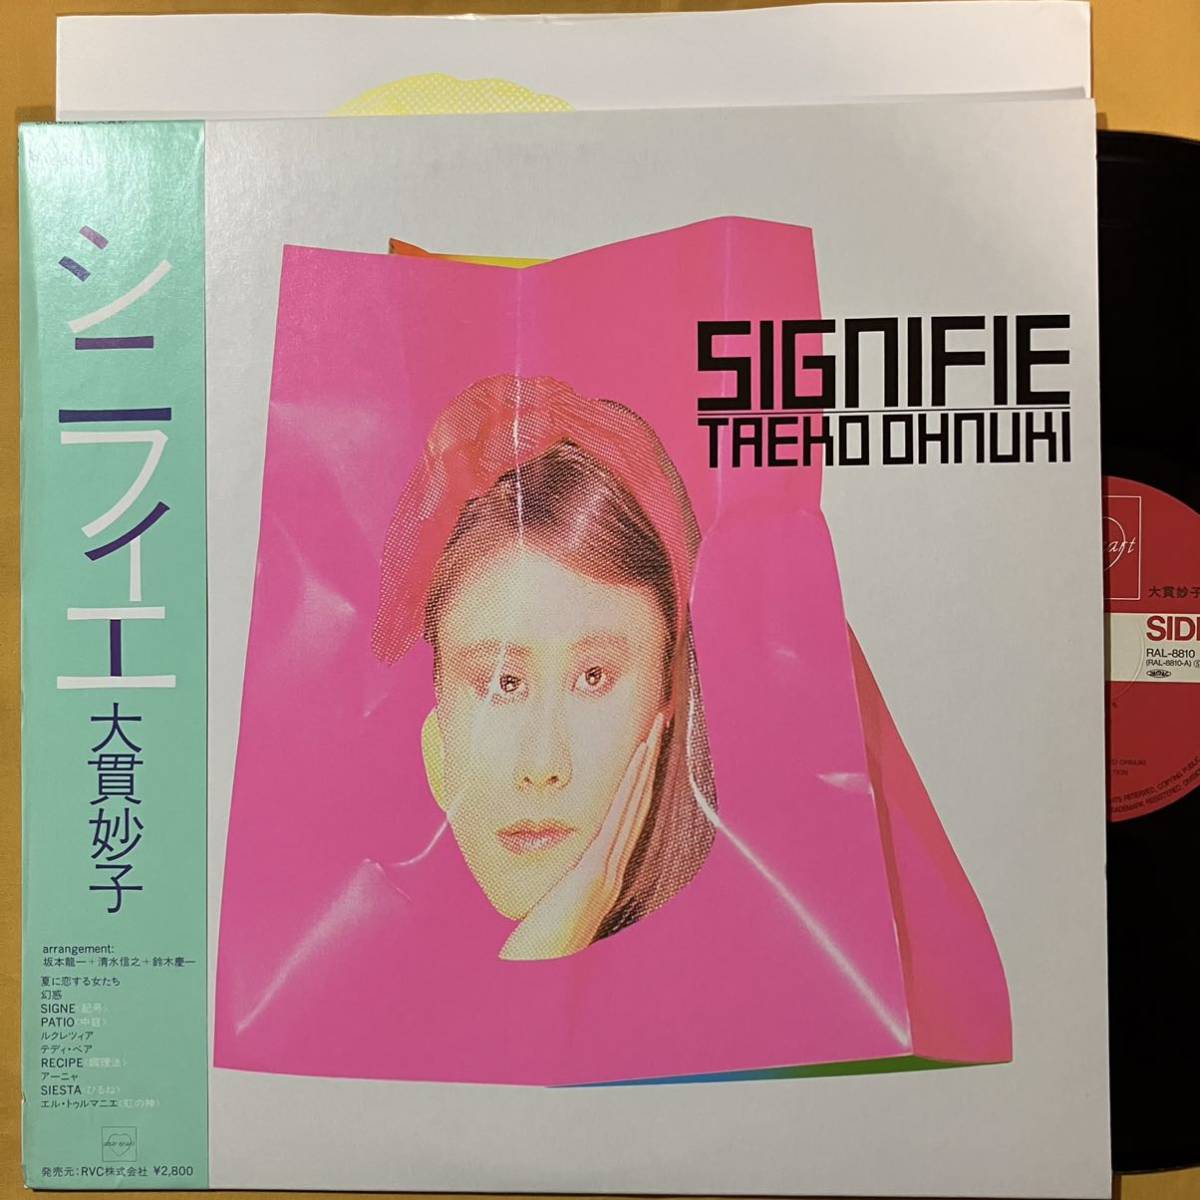 12H 帯付き 大貫妙子 Taeko Ohnuki / シニフィエ Signifie RAL-8810 LP レコード アナログ盤の画像1